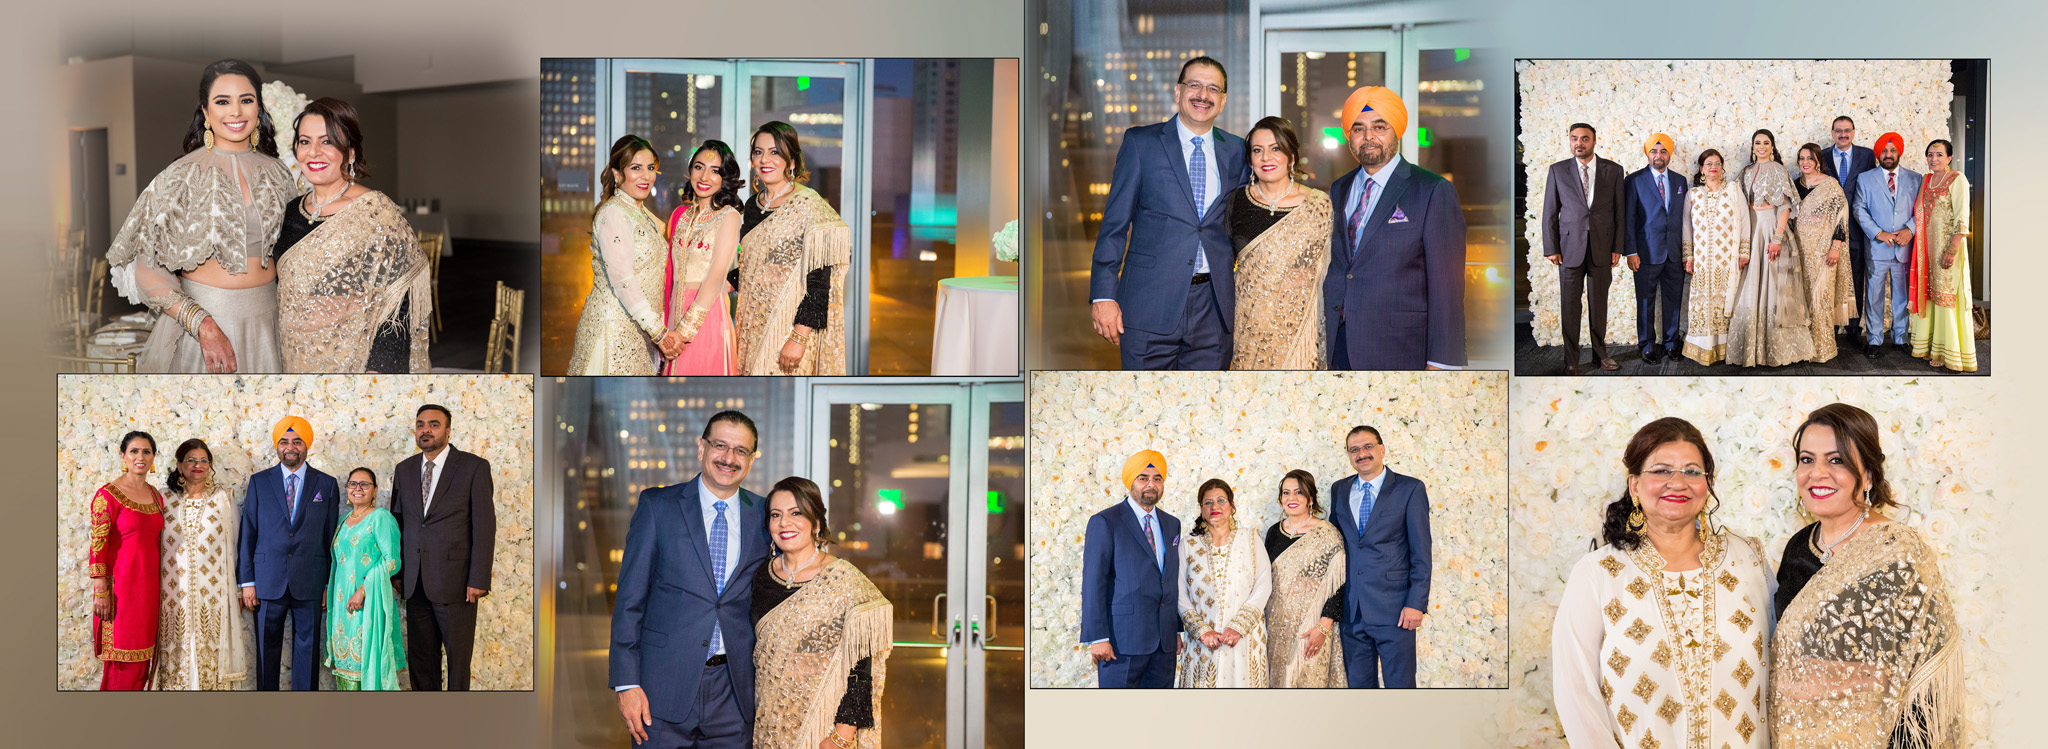 Indian wedding album design reception family portraits